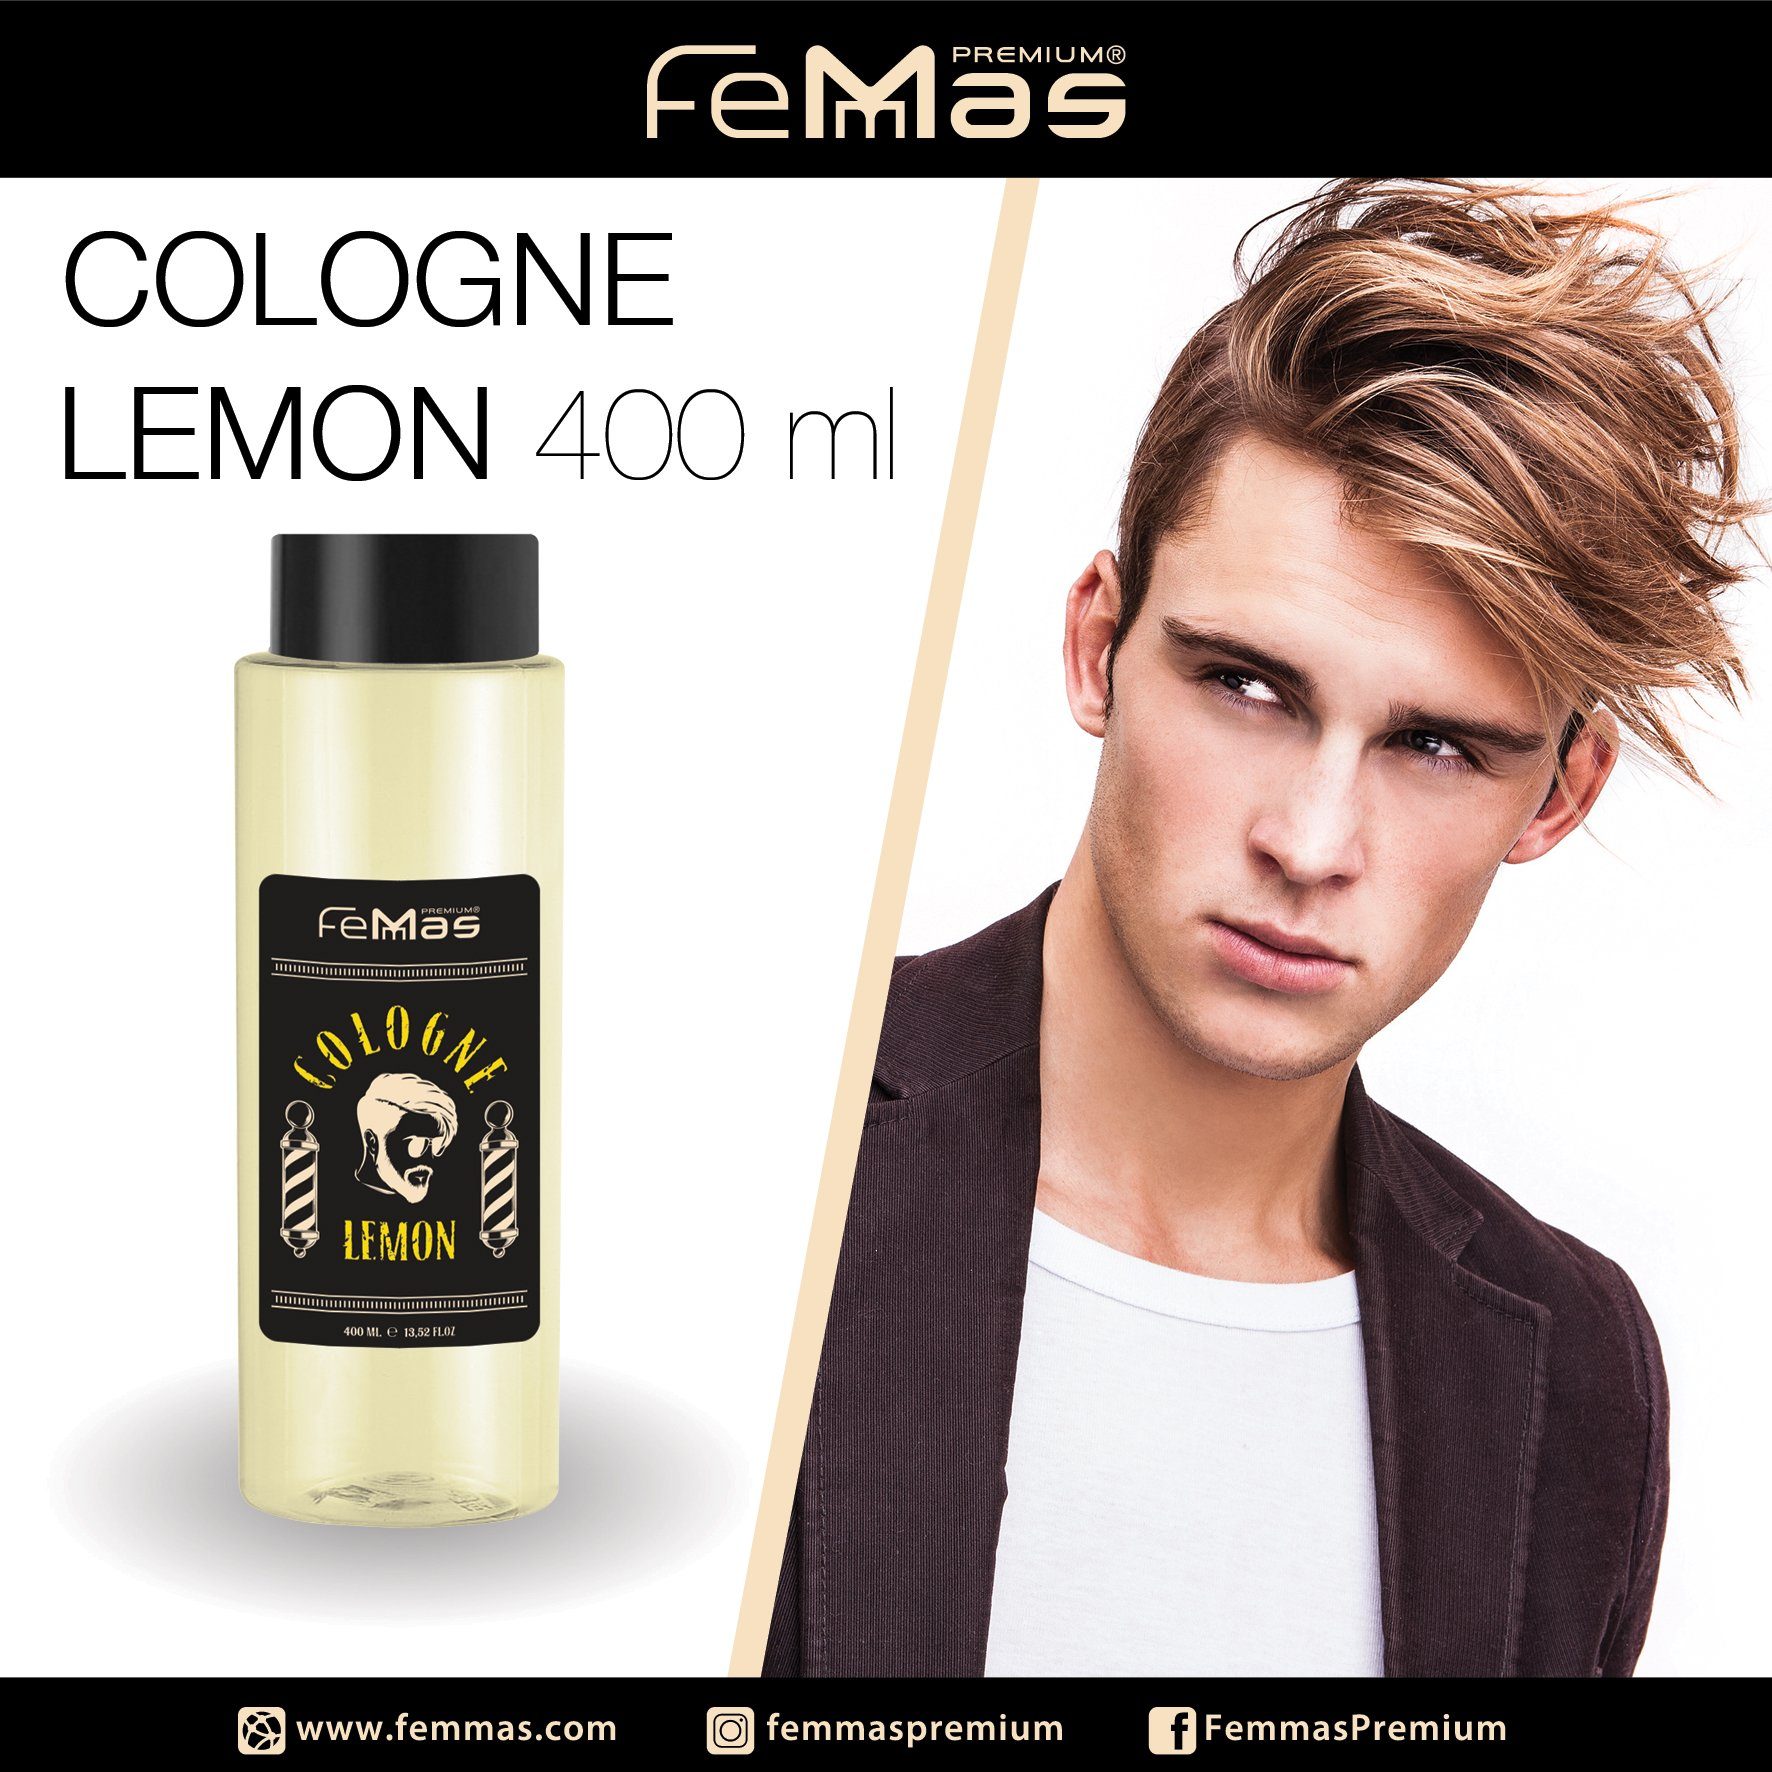 Premium Cologne de Stück Eau 400ml Cologne 2 Lemon FemMas Femmas